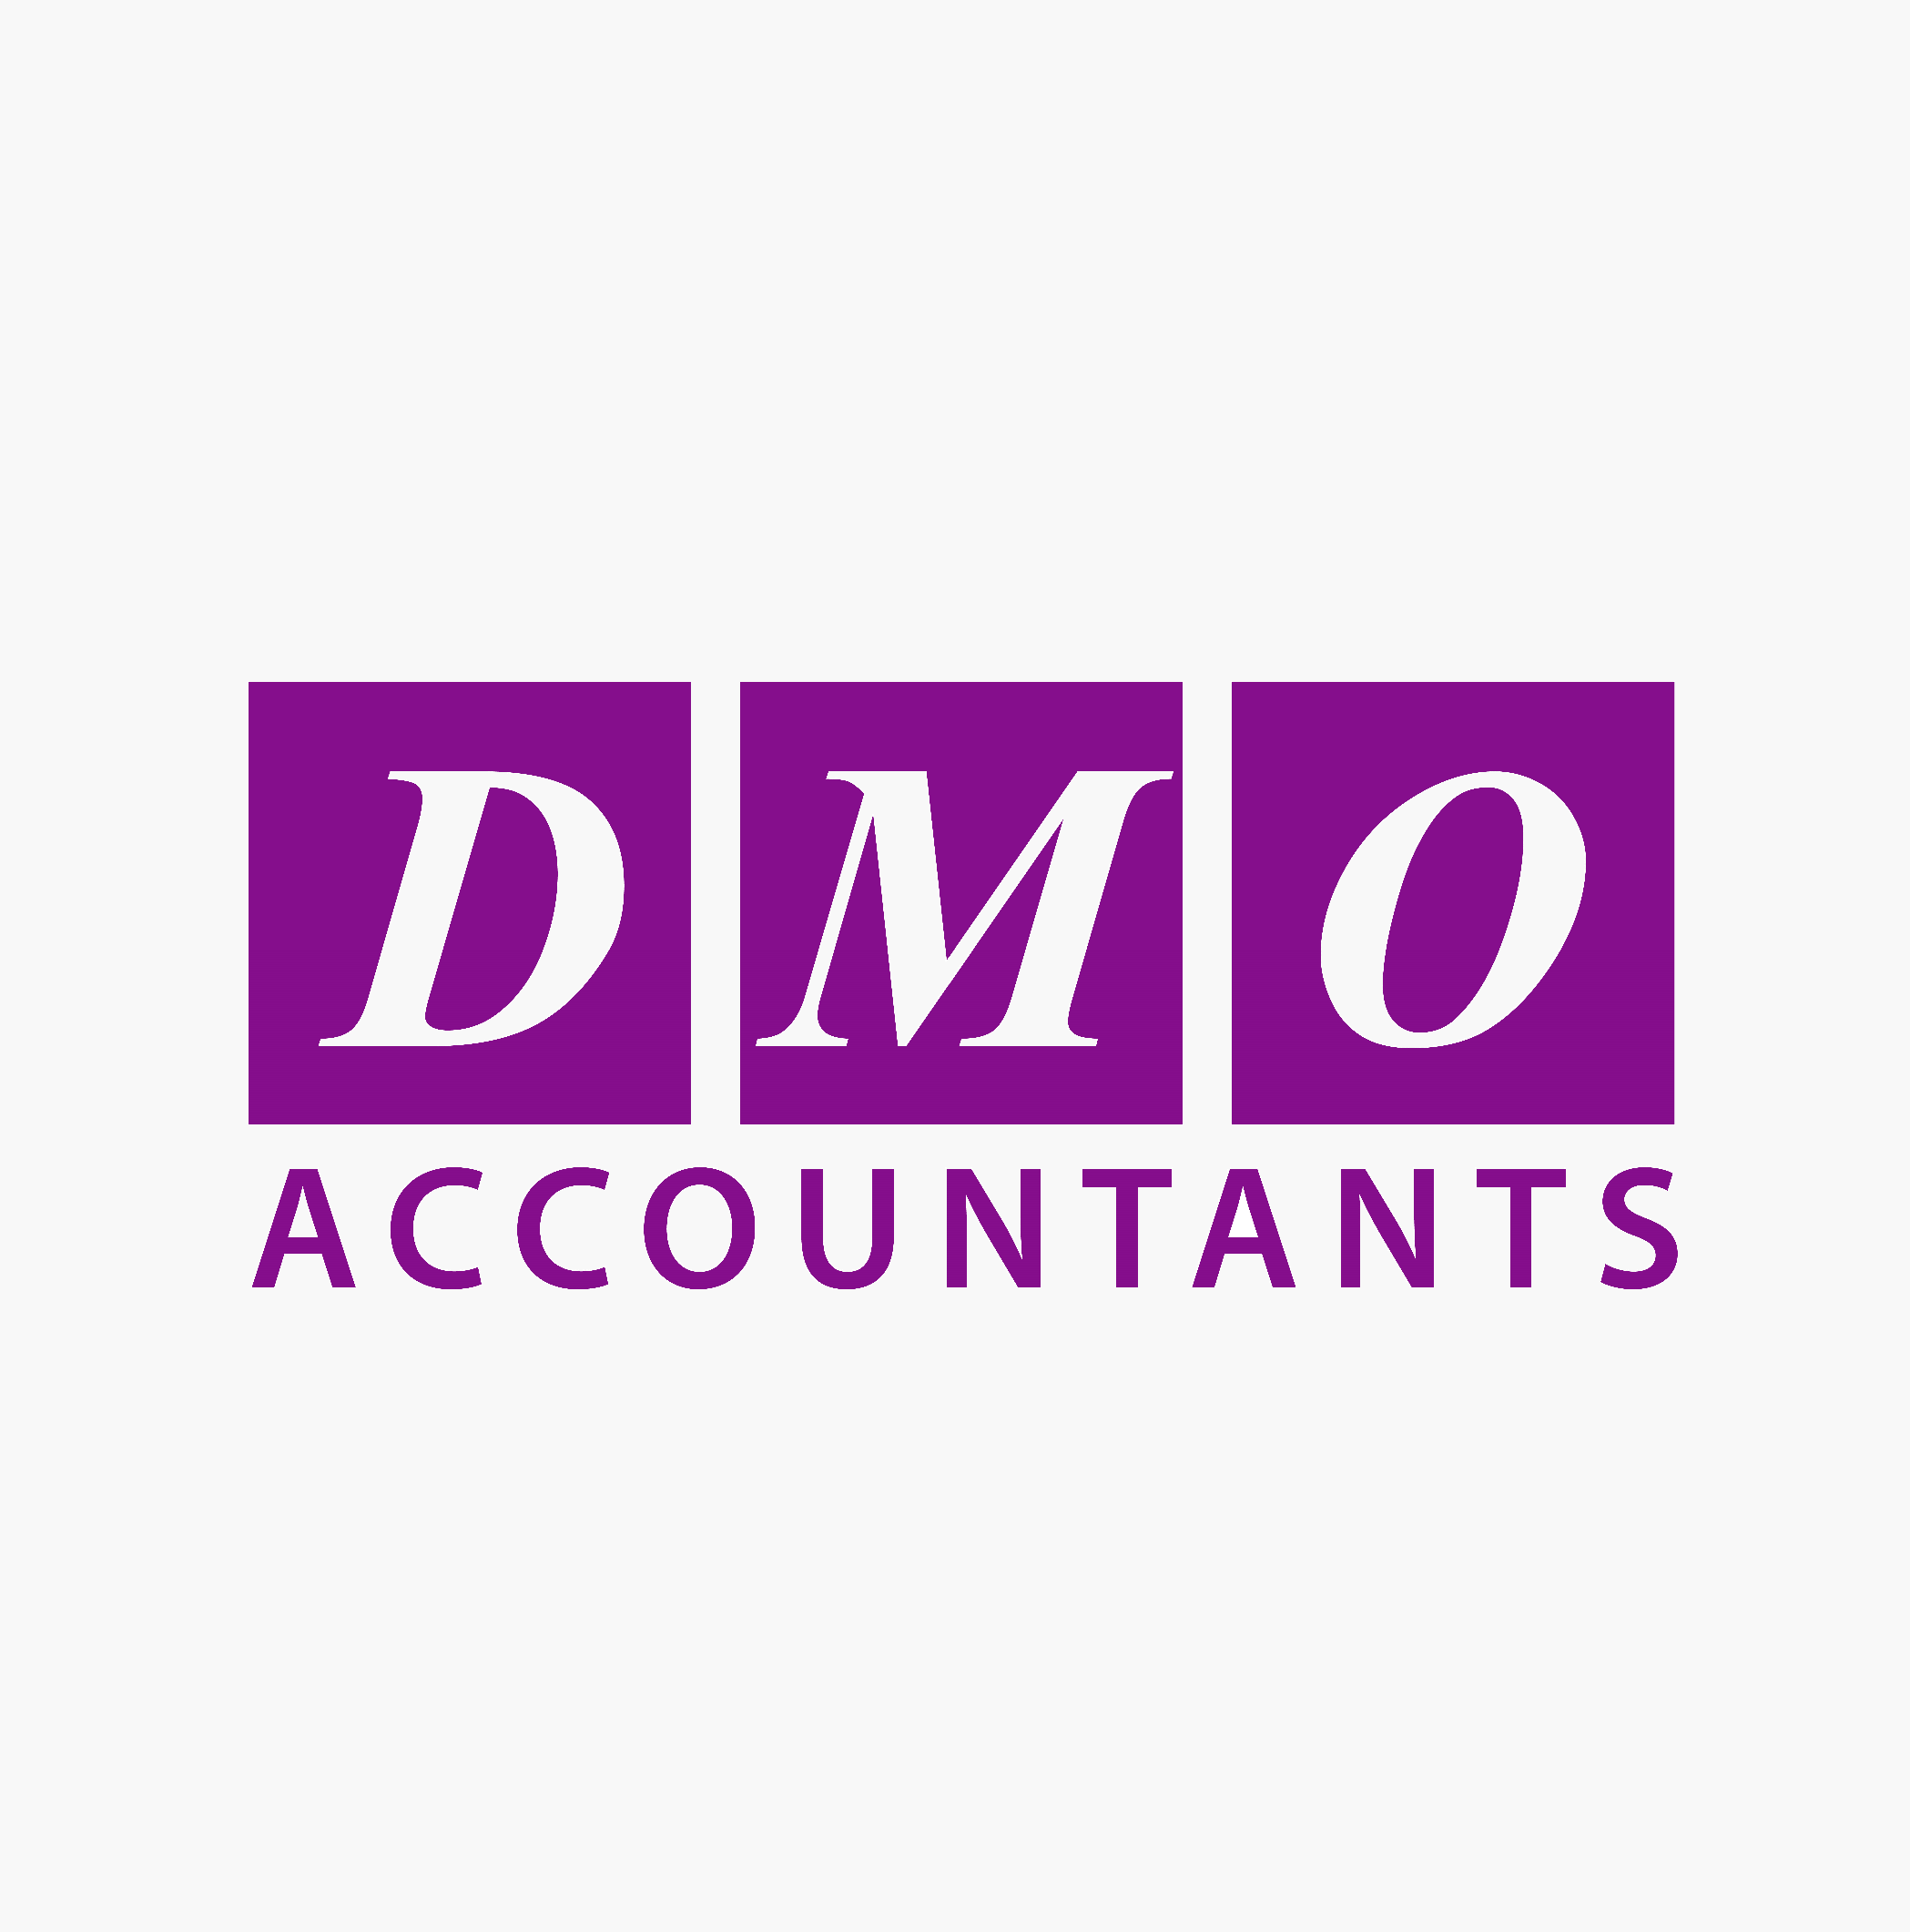 DMO Accountants